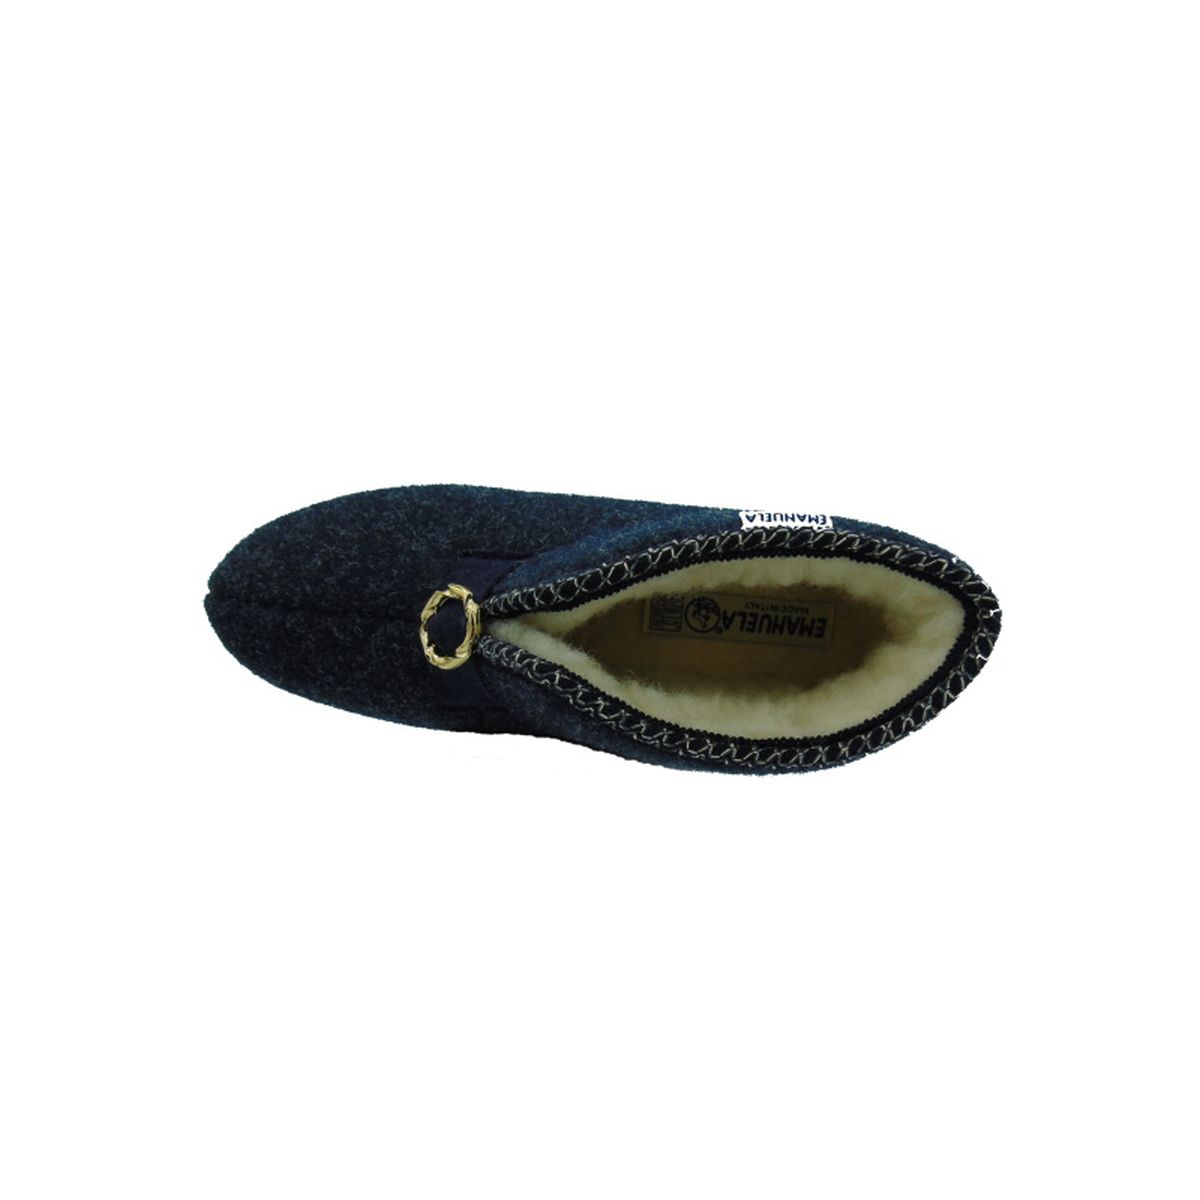 Pantofola Donna, interno lana, Emanuela 509 Blu